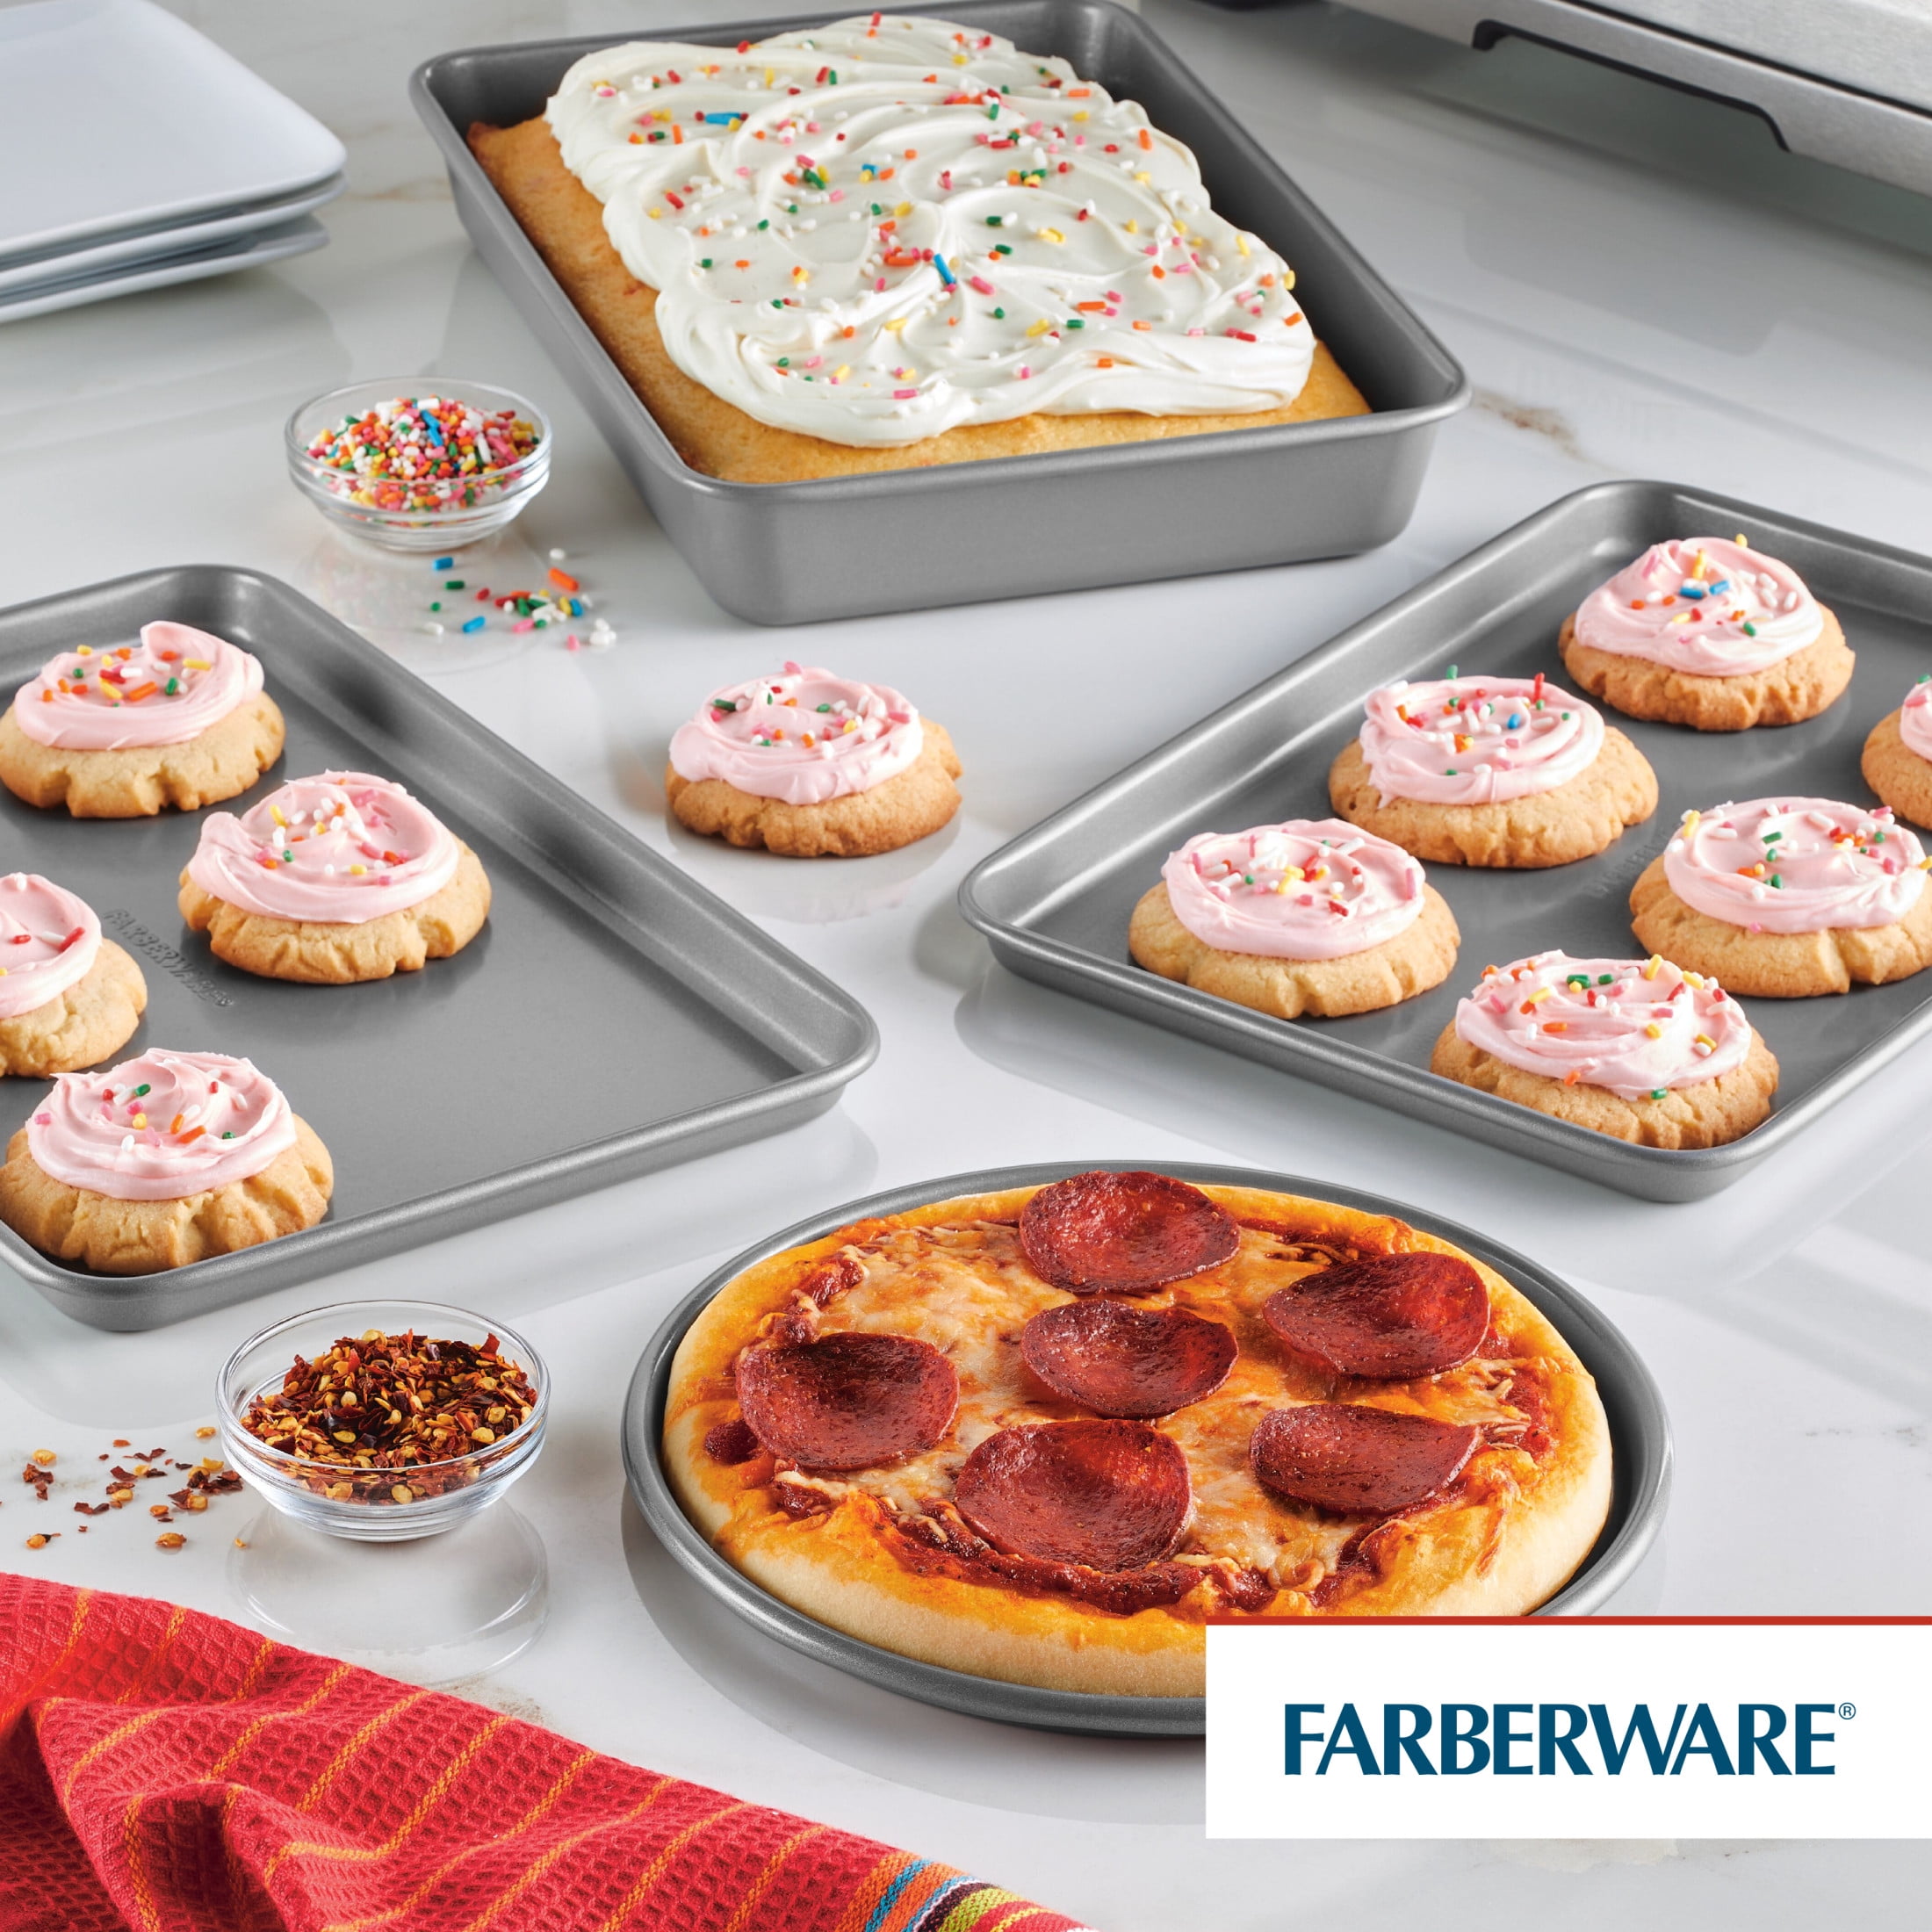 Farberware Nonstick Bakeware Cookie Pan and Cake Pan Set, 4-Piece, Gray